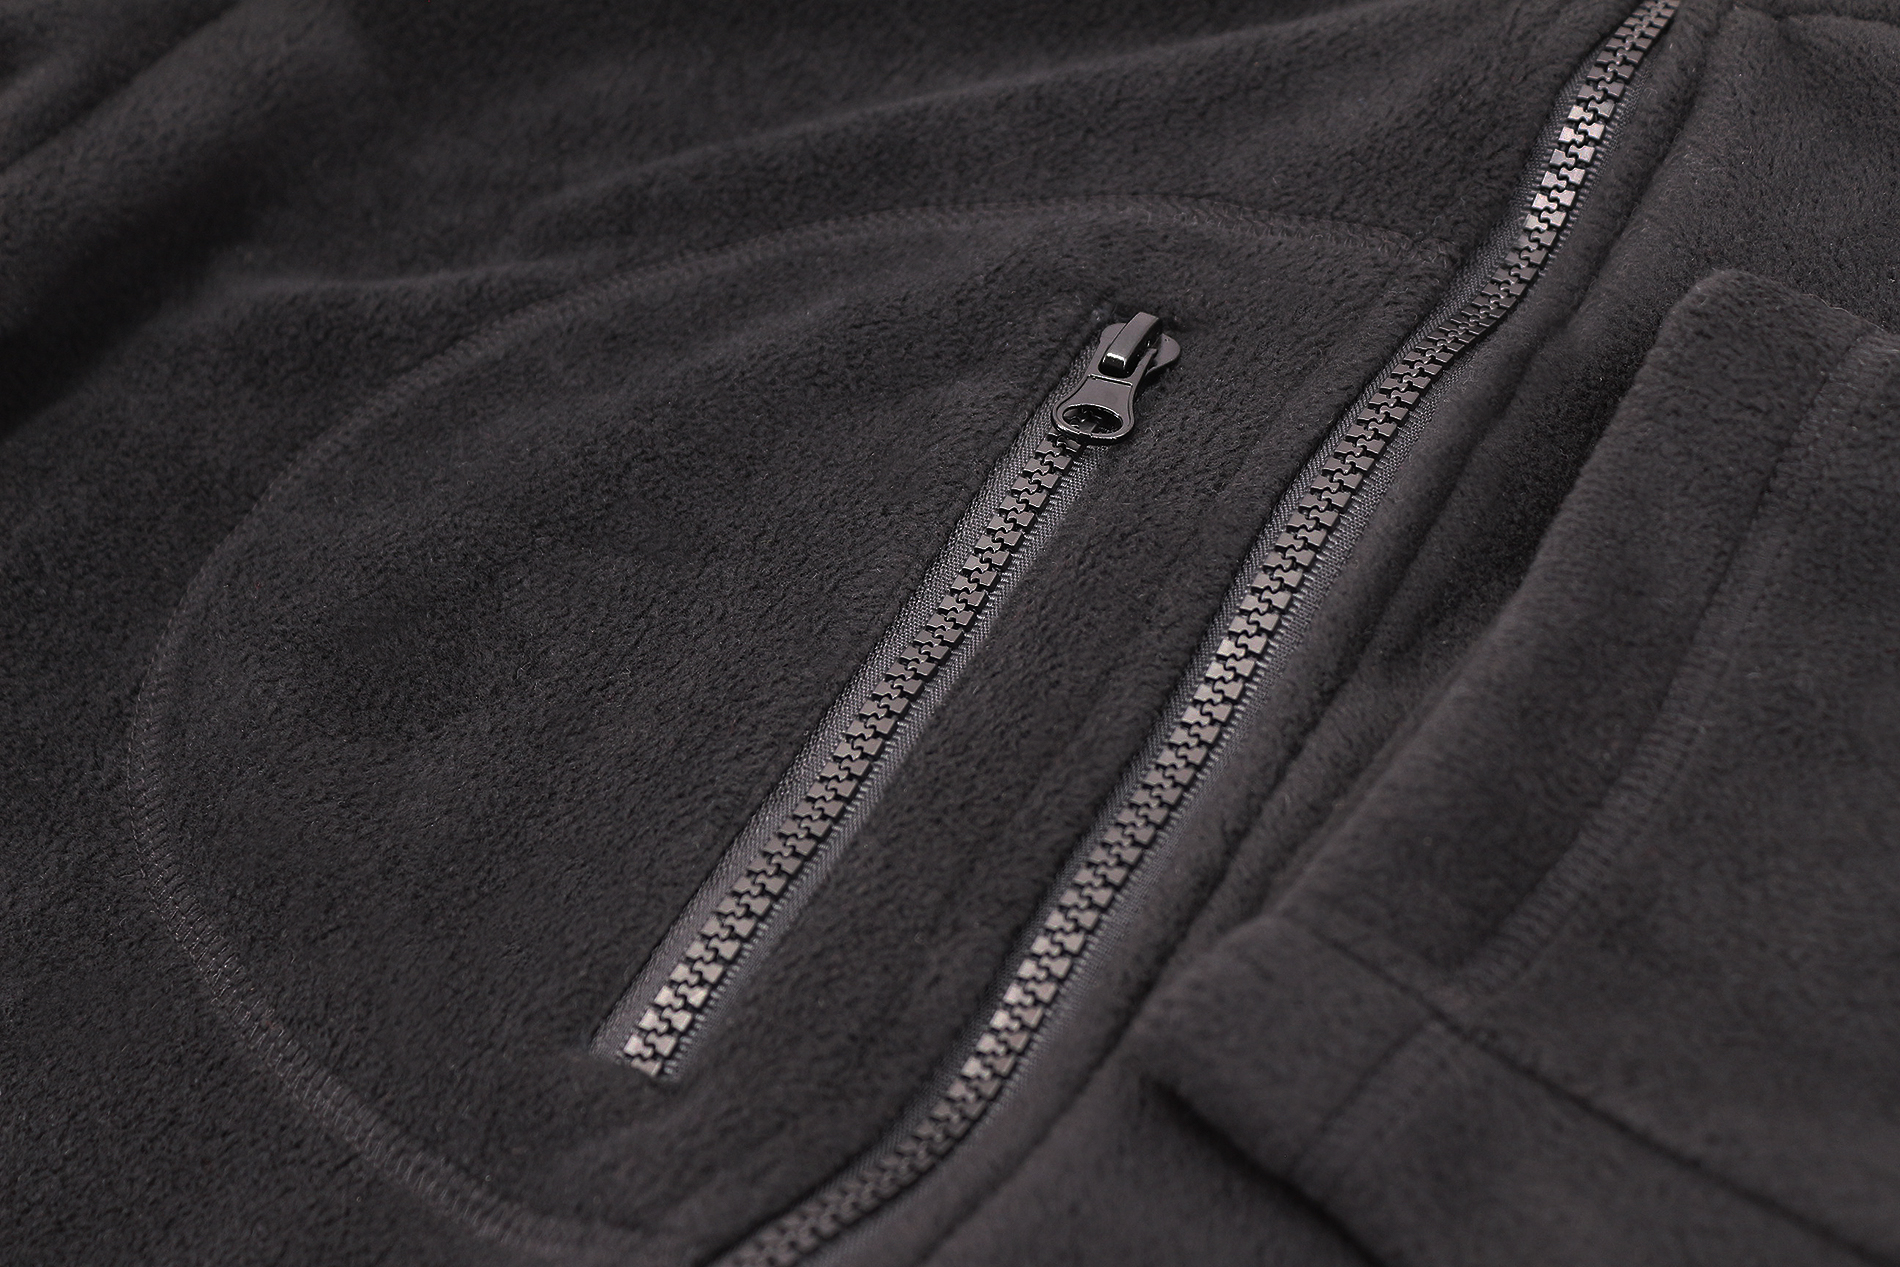 Men's Polar Fleece Full Zip-Up Collared Sweater Lightweight Warm Sweater Jacket (XL, Black) - image 3 of 3